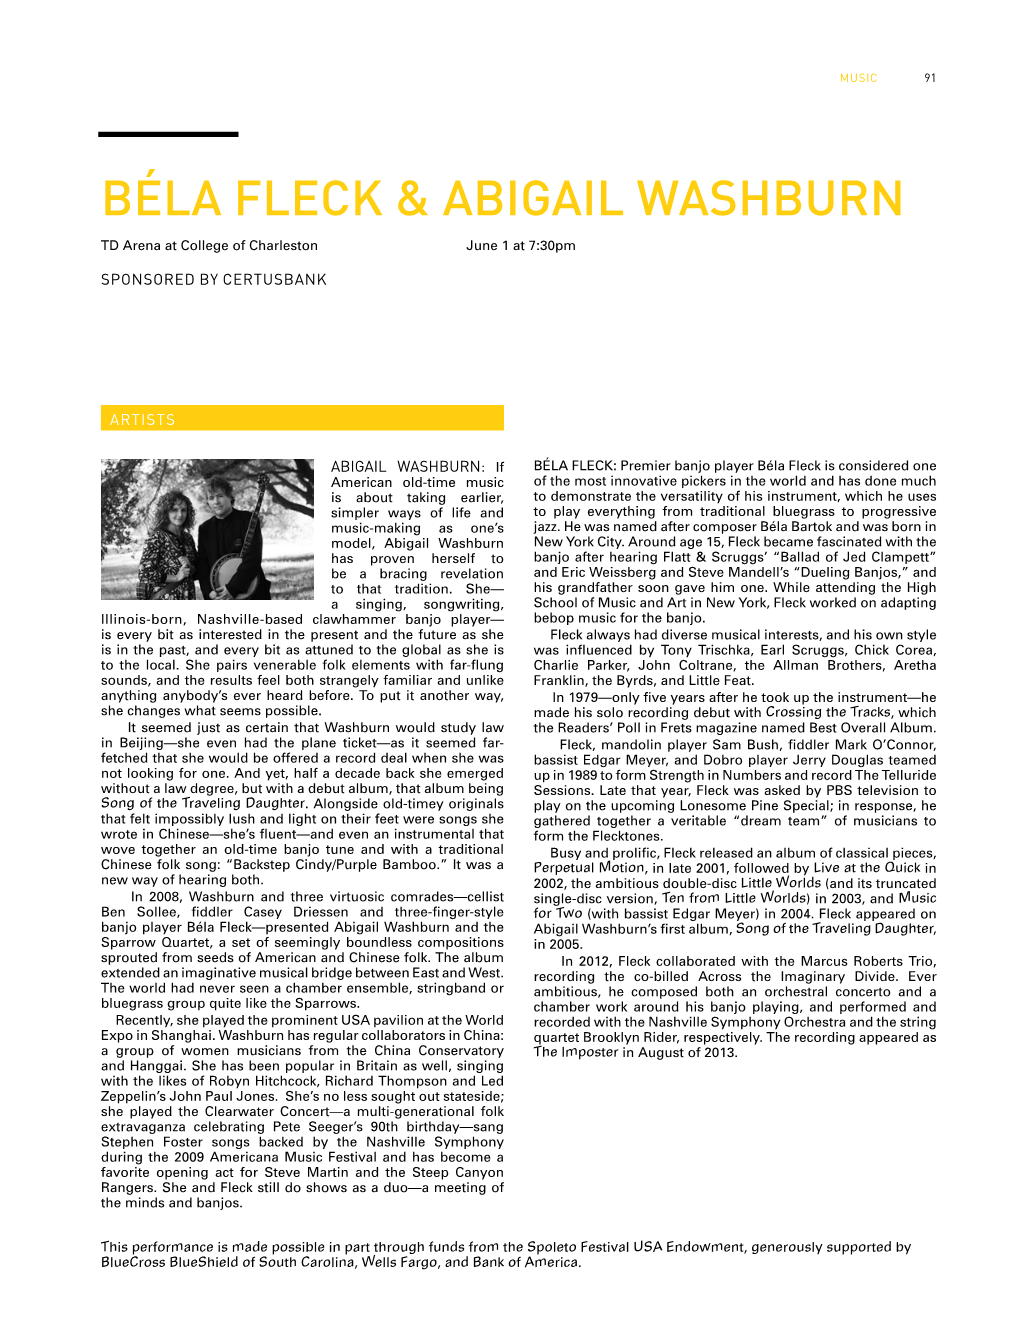 Béla Fleck & Abigail Washburn